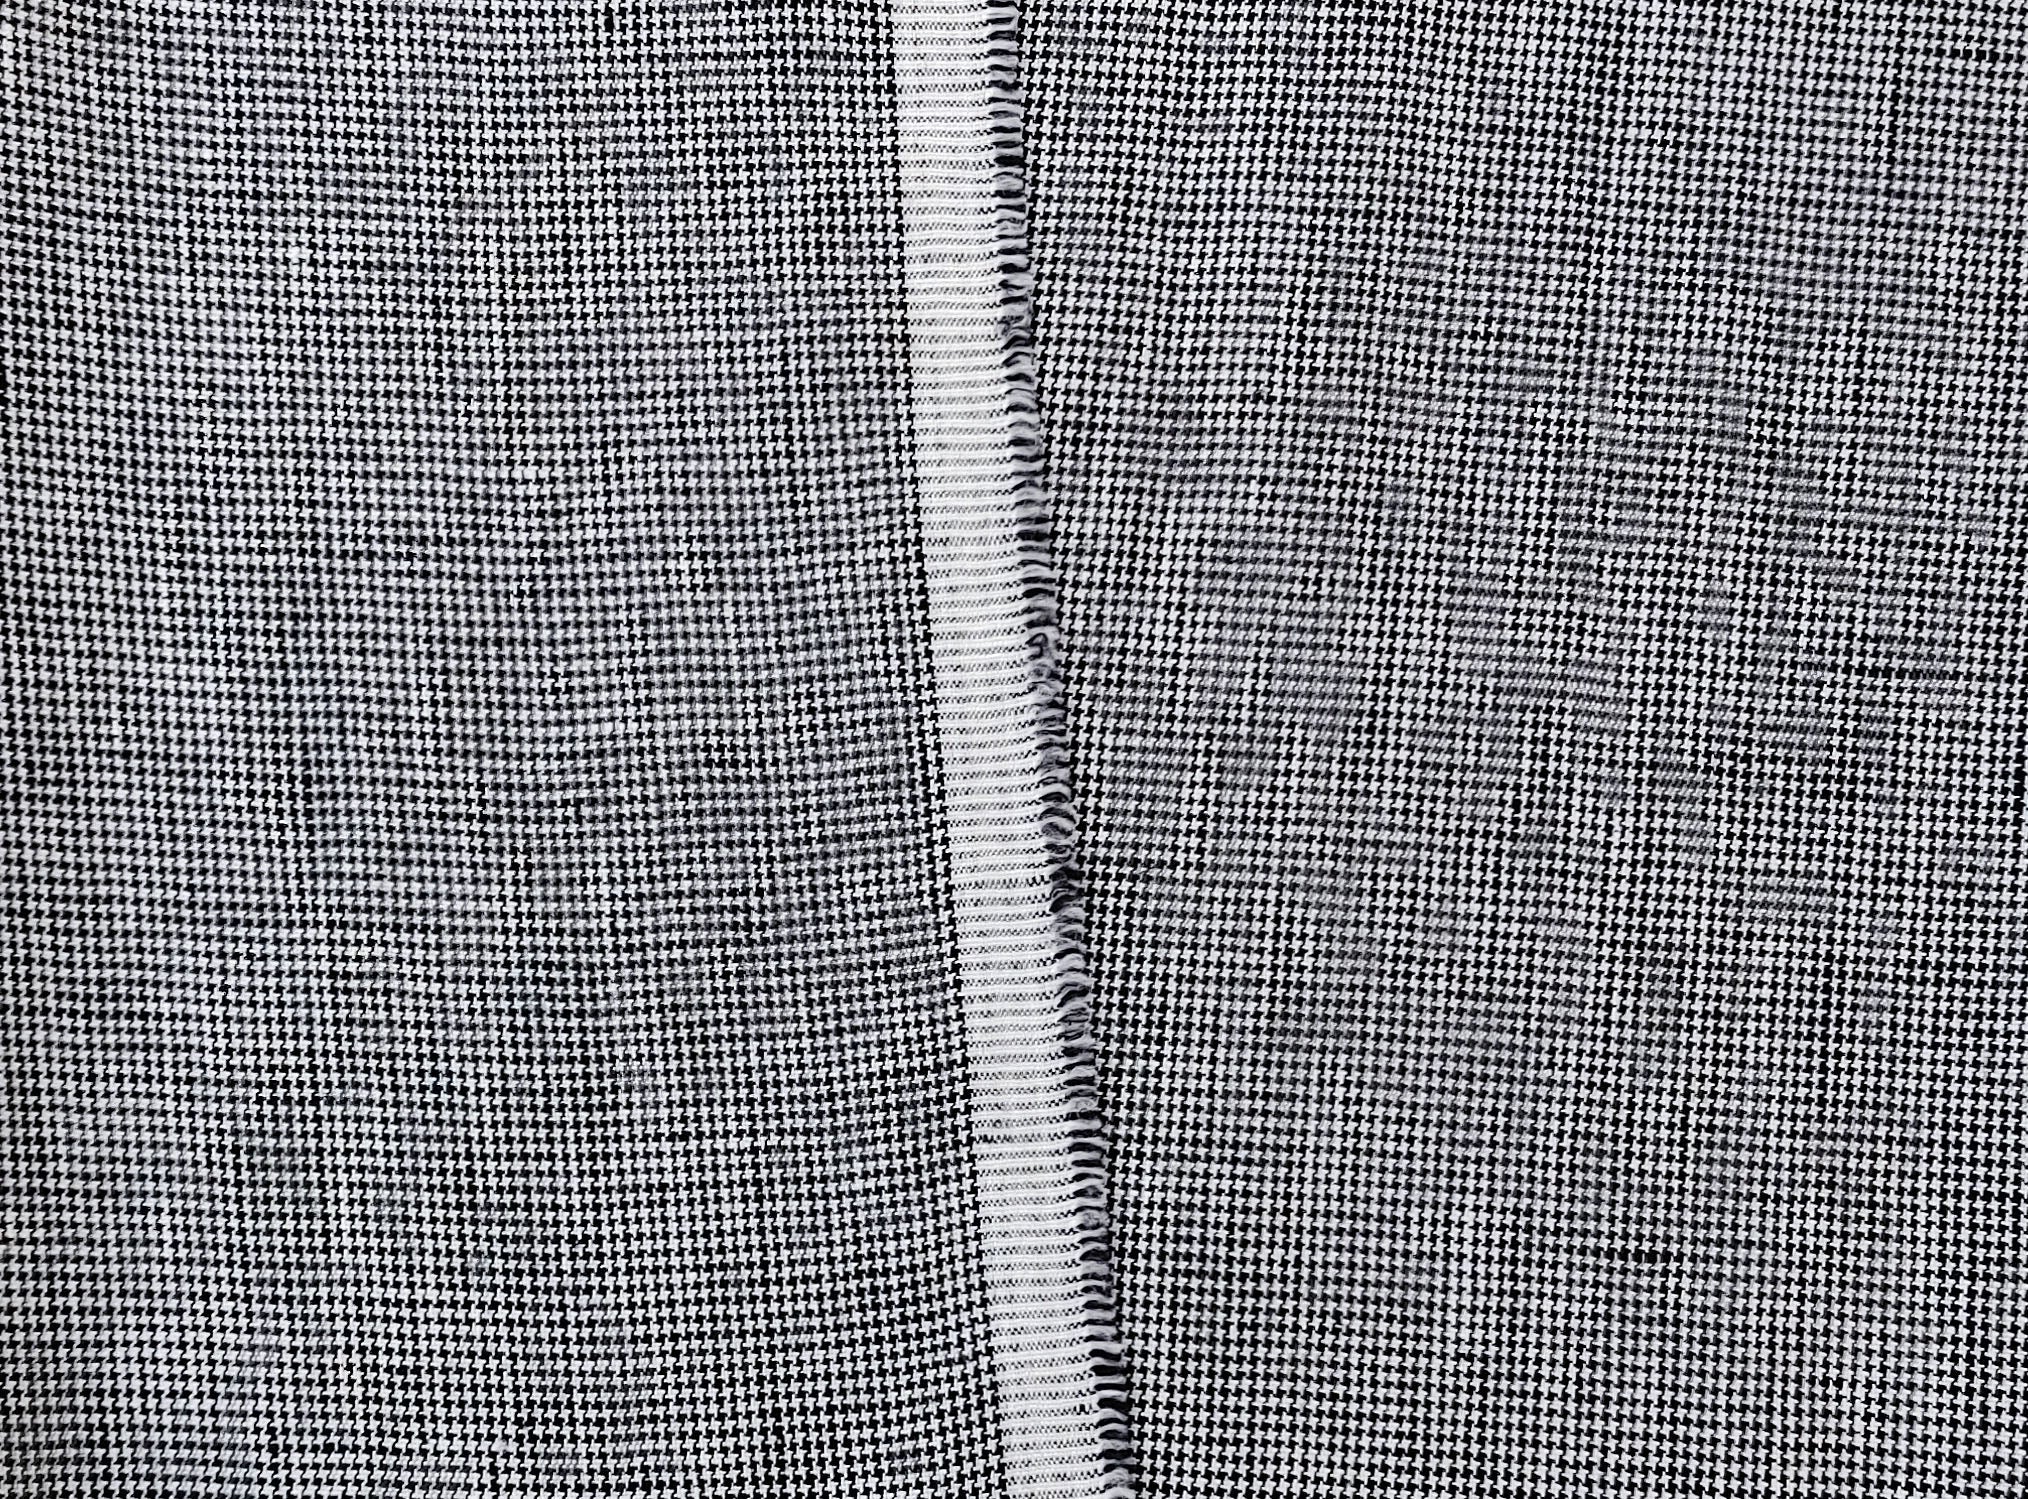 100% Linen, Medium Weight, Classic Black and White Mini Gingham Check 6825 - The Linen Lab - Gray(Dark)